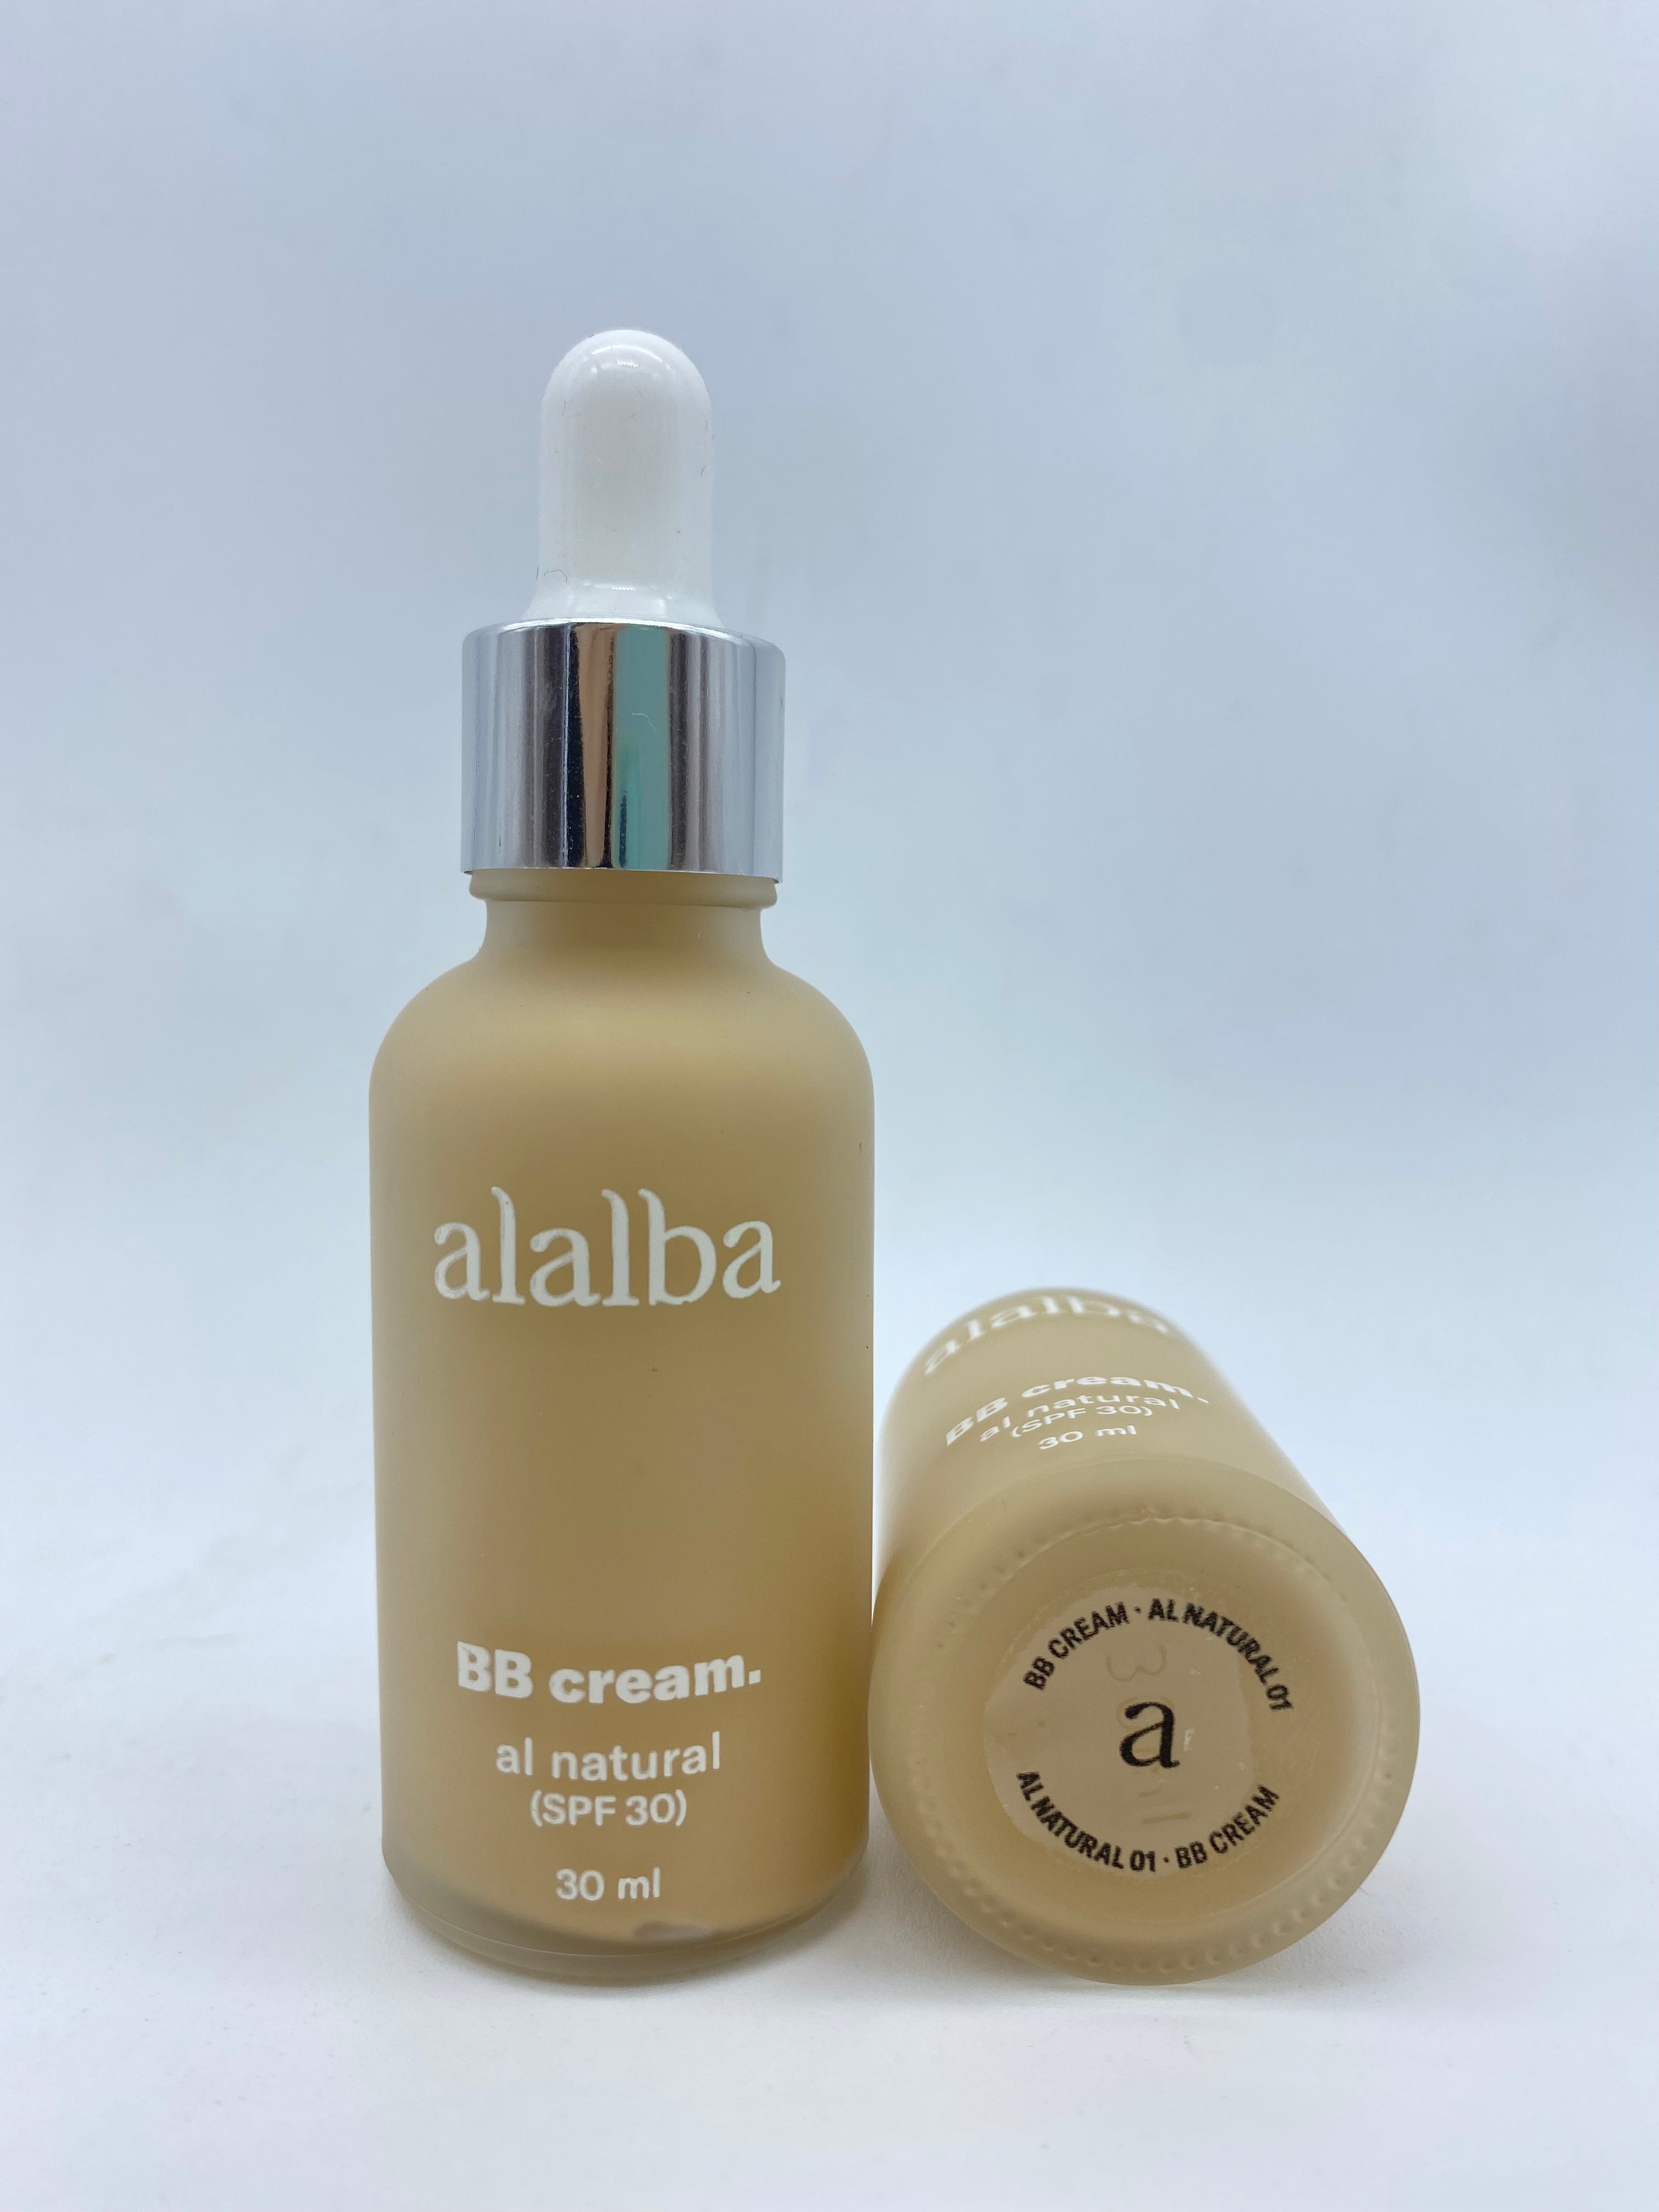 Alalba- Bb cream AL NATURAL